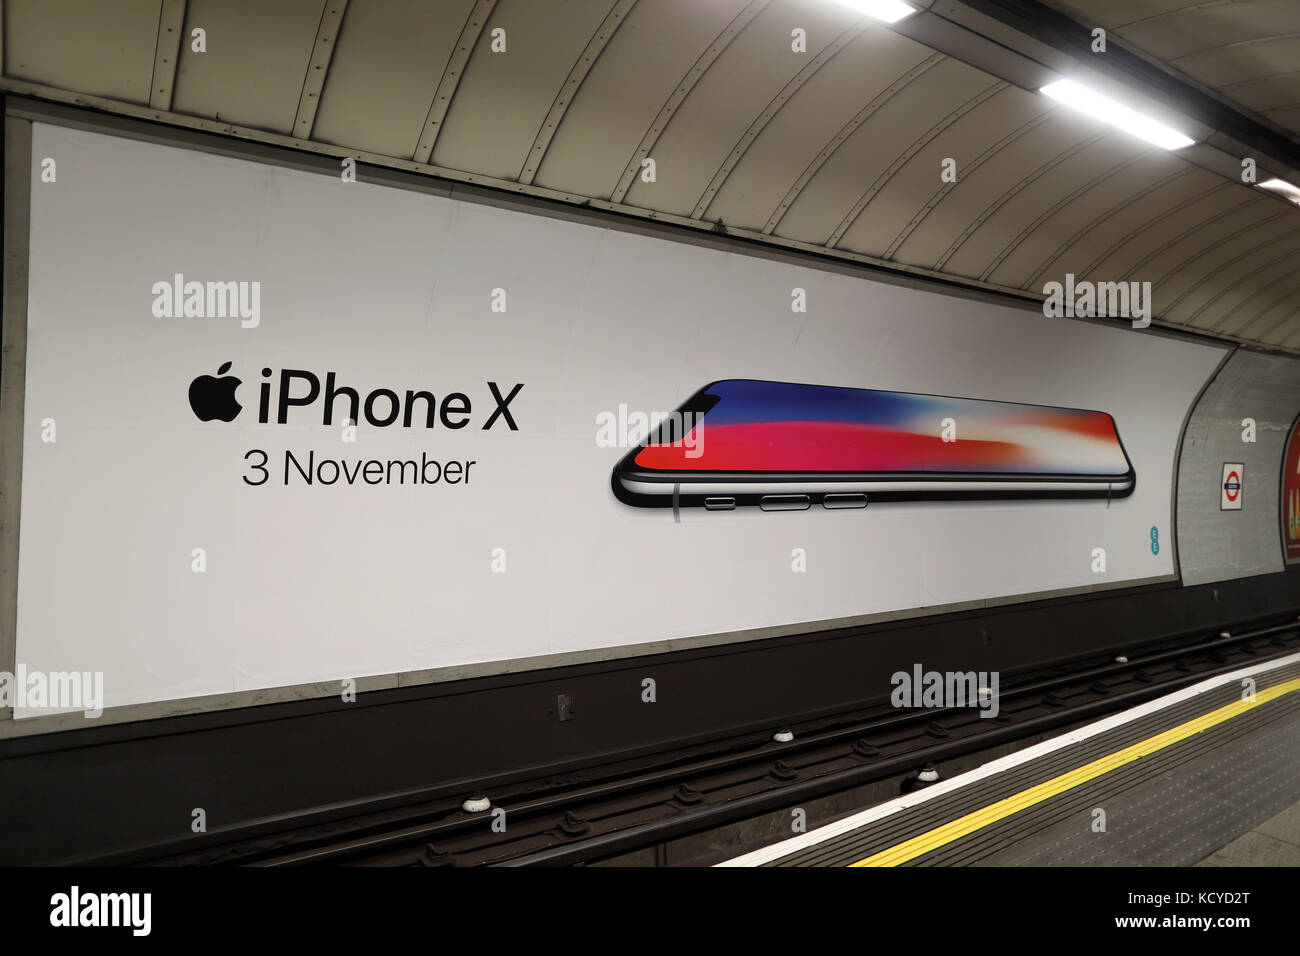 Tube underground advert Iphone X     Iphone X advert tube platform Stock Photo